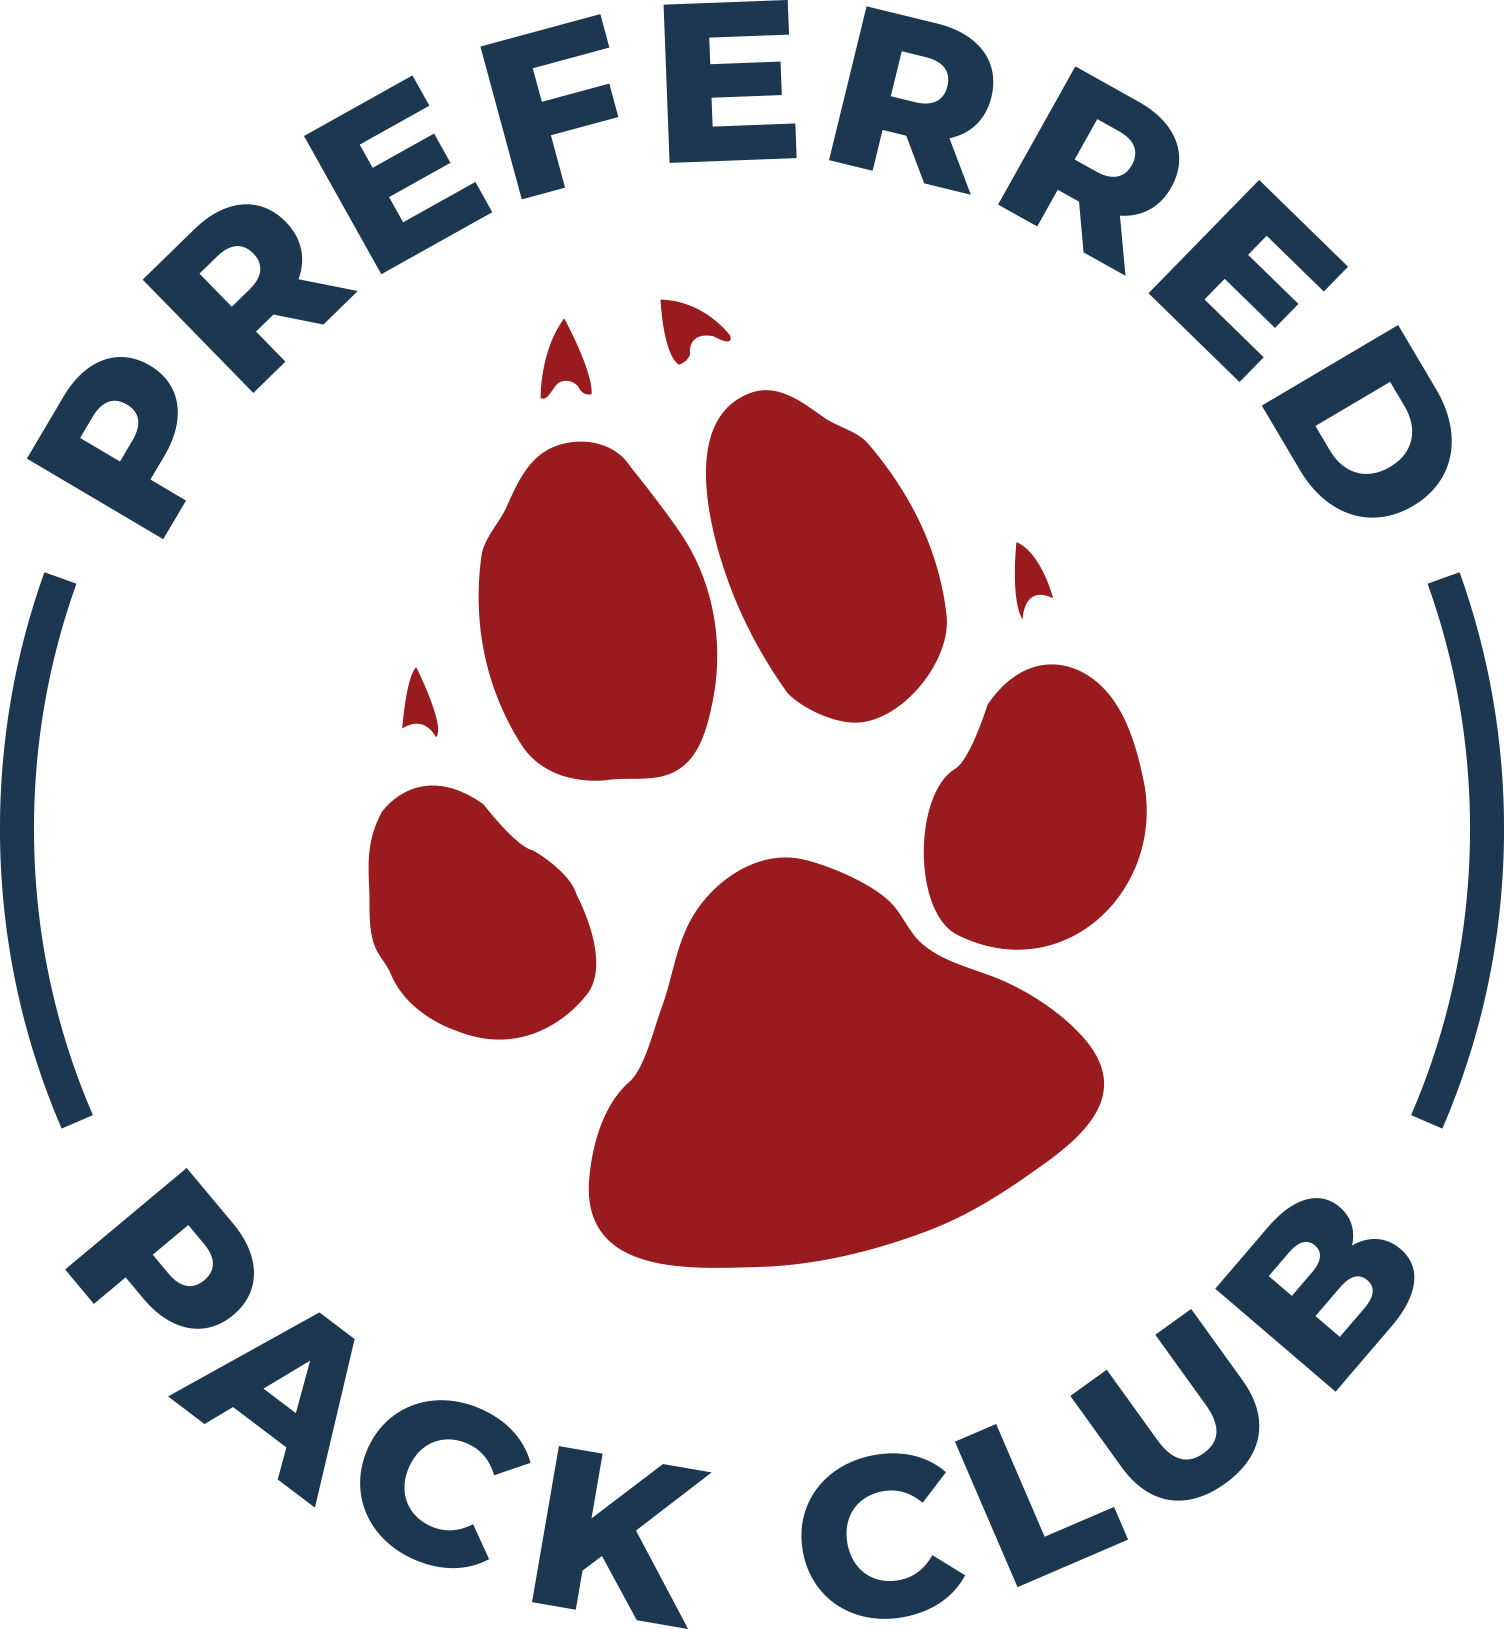 preferred pack club logo